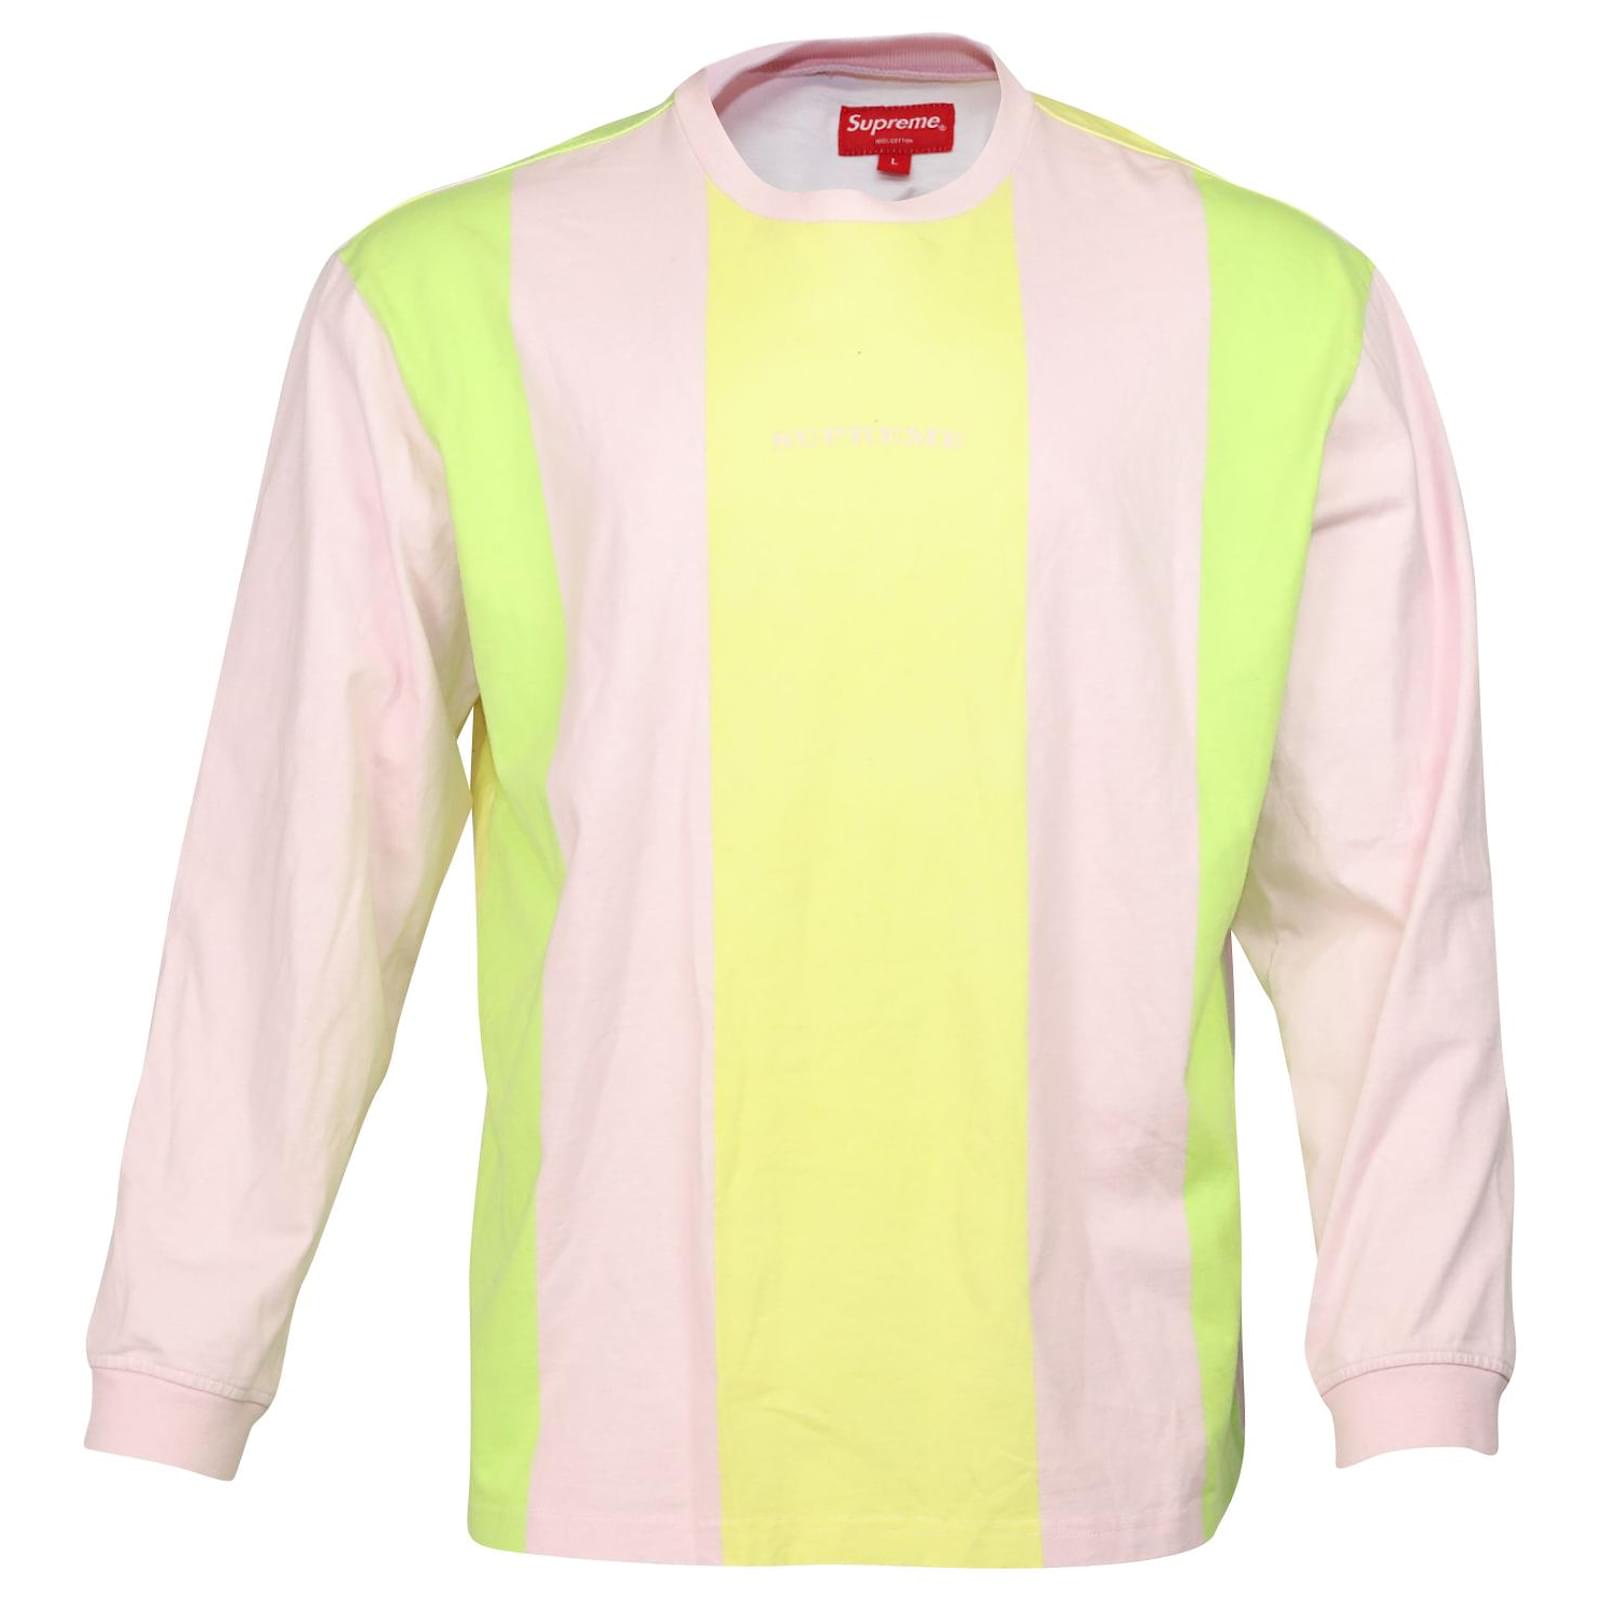 https://cdn1.jolicloset.com/imgr/full/2022/05/523955-1/supreme-global-standard-long-sleeve-t-shirt-in-pink-print-cotton.jpg